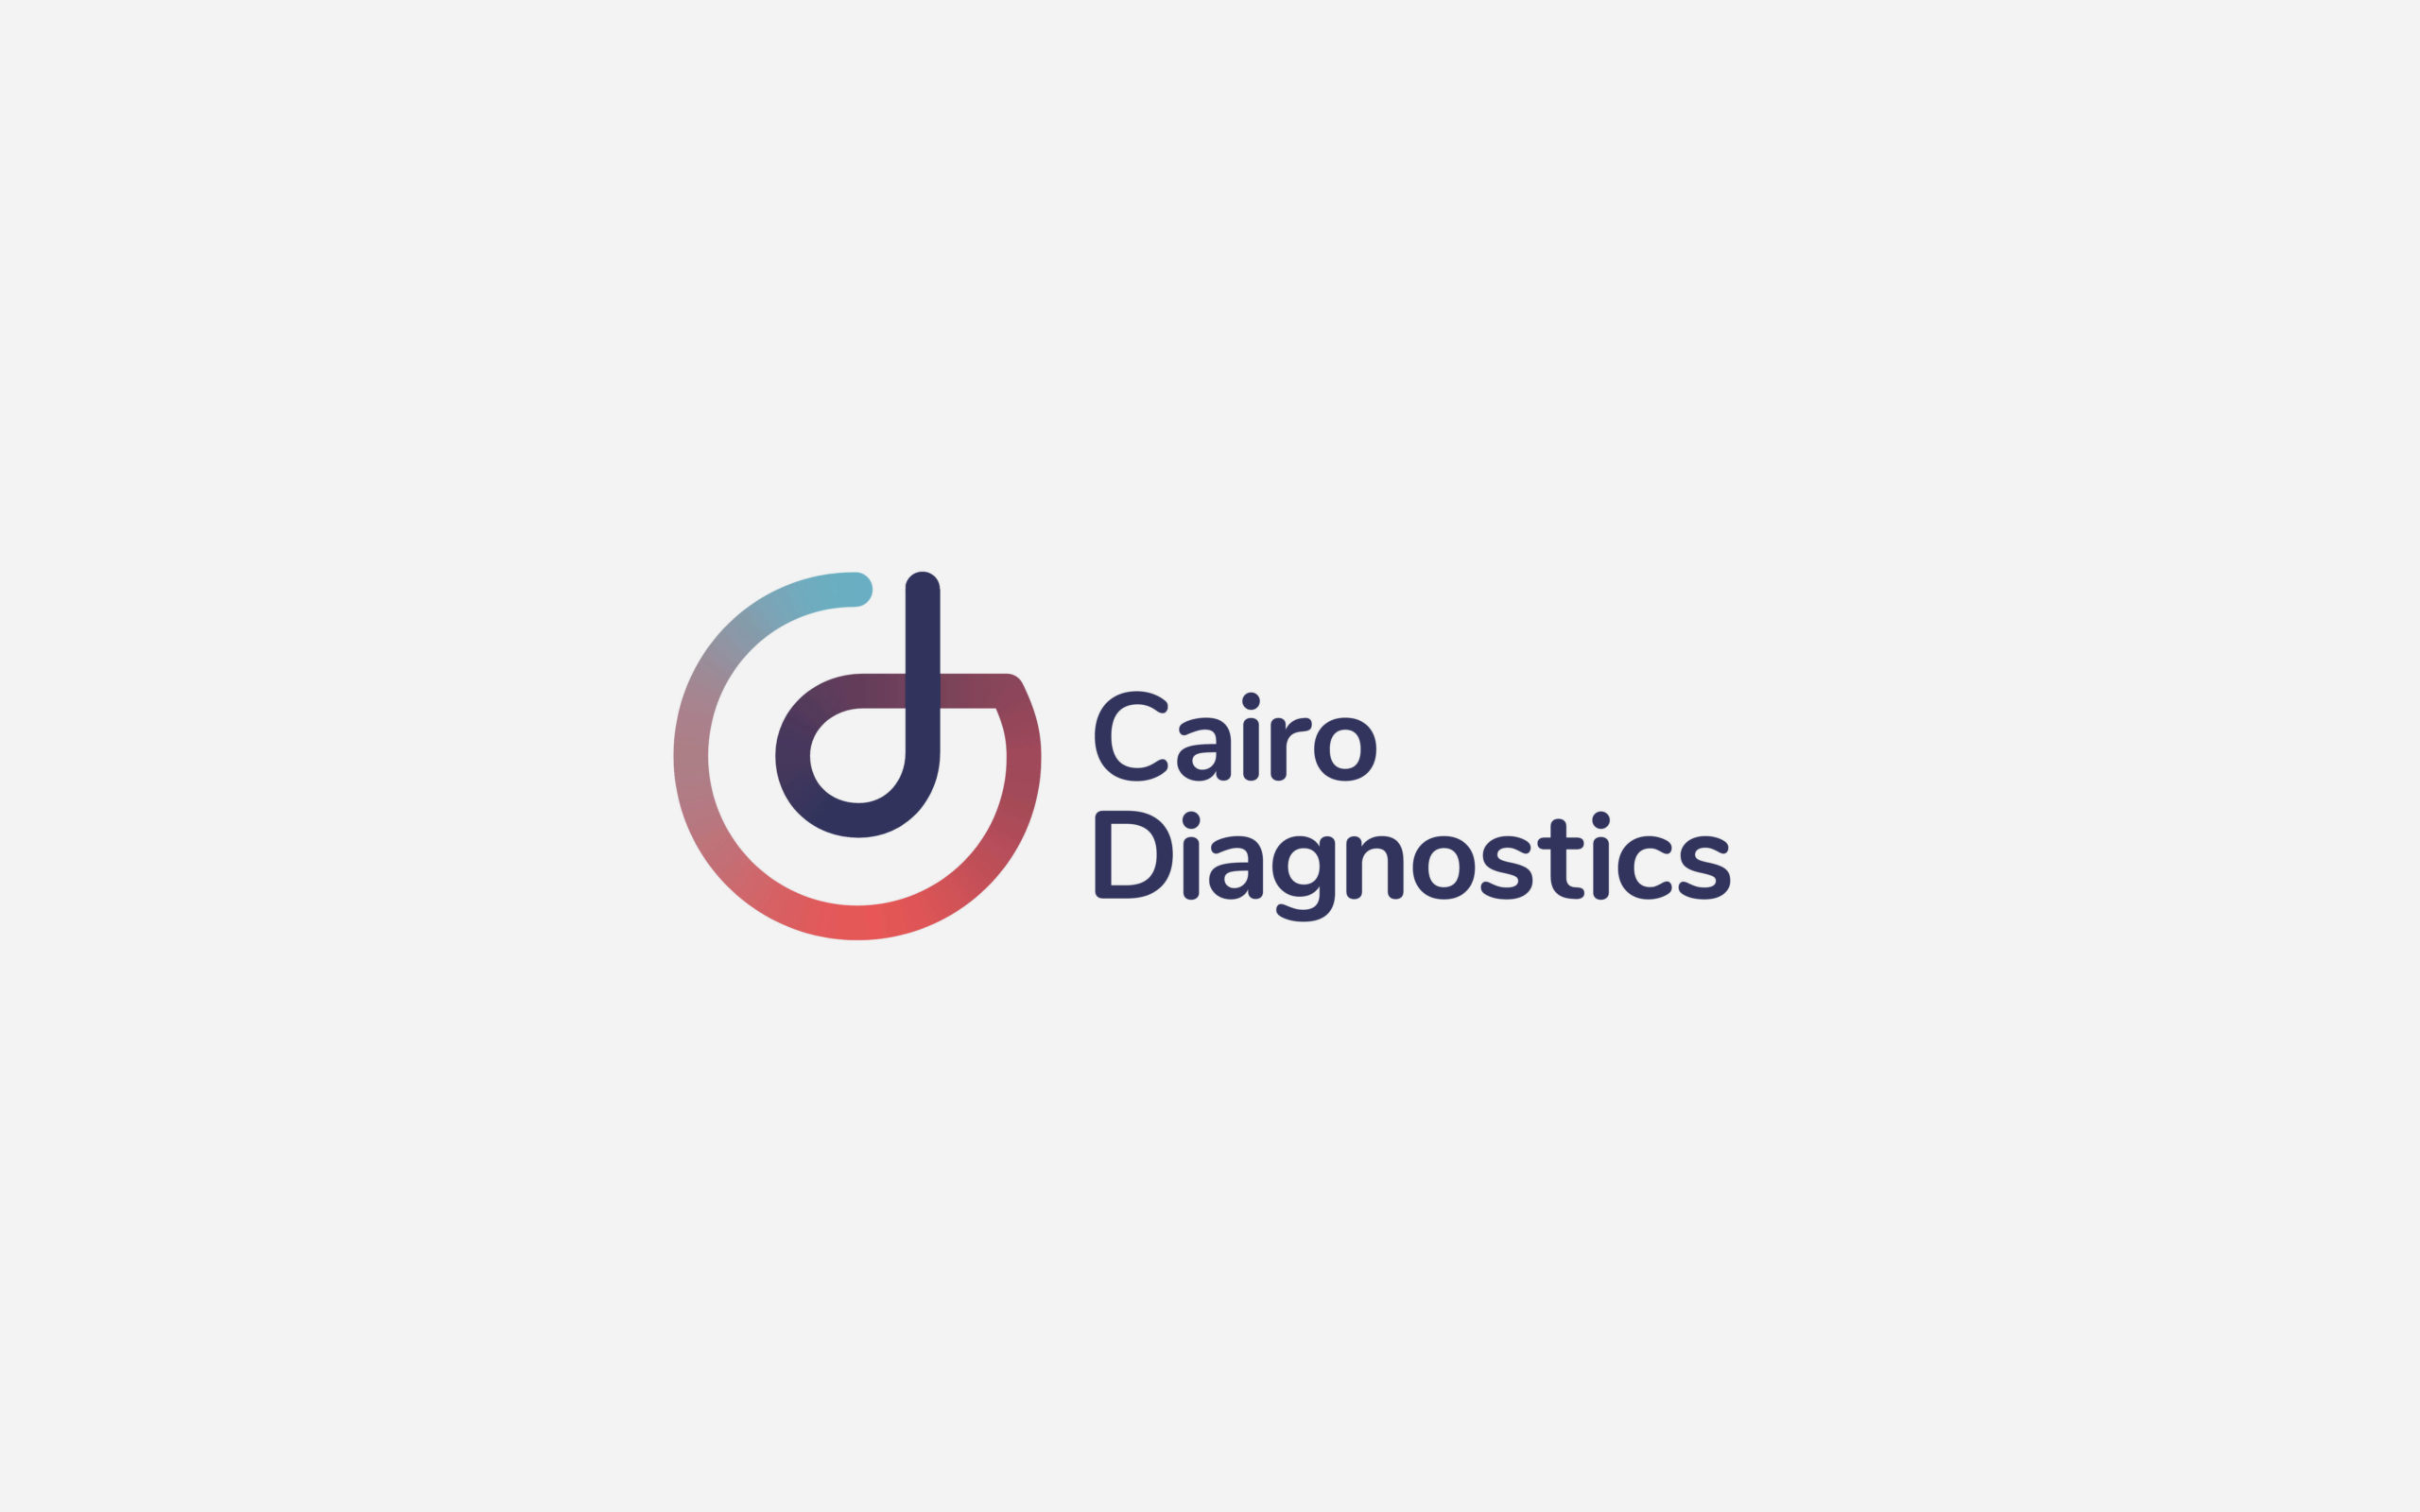 Cairo Diagnostics Rebranding